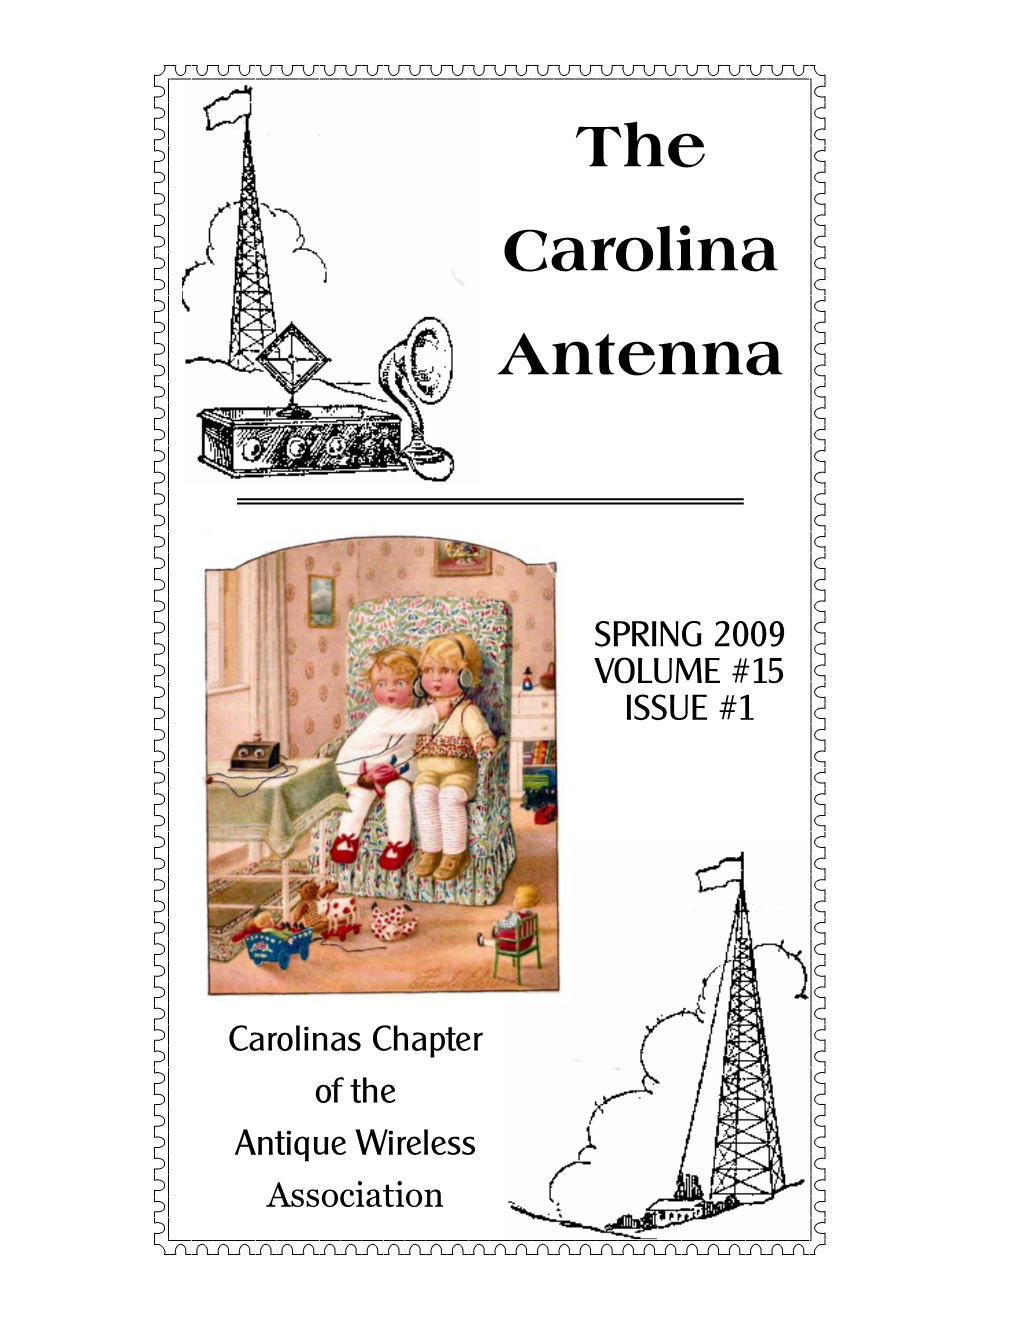 The Carolina Antenna